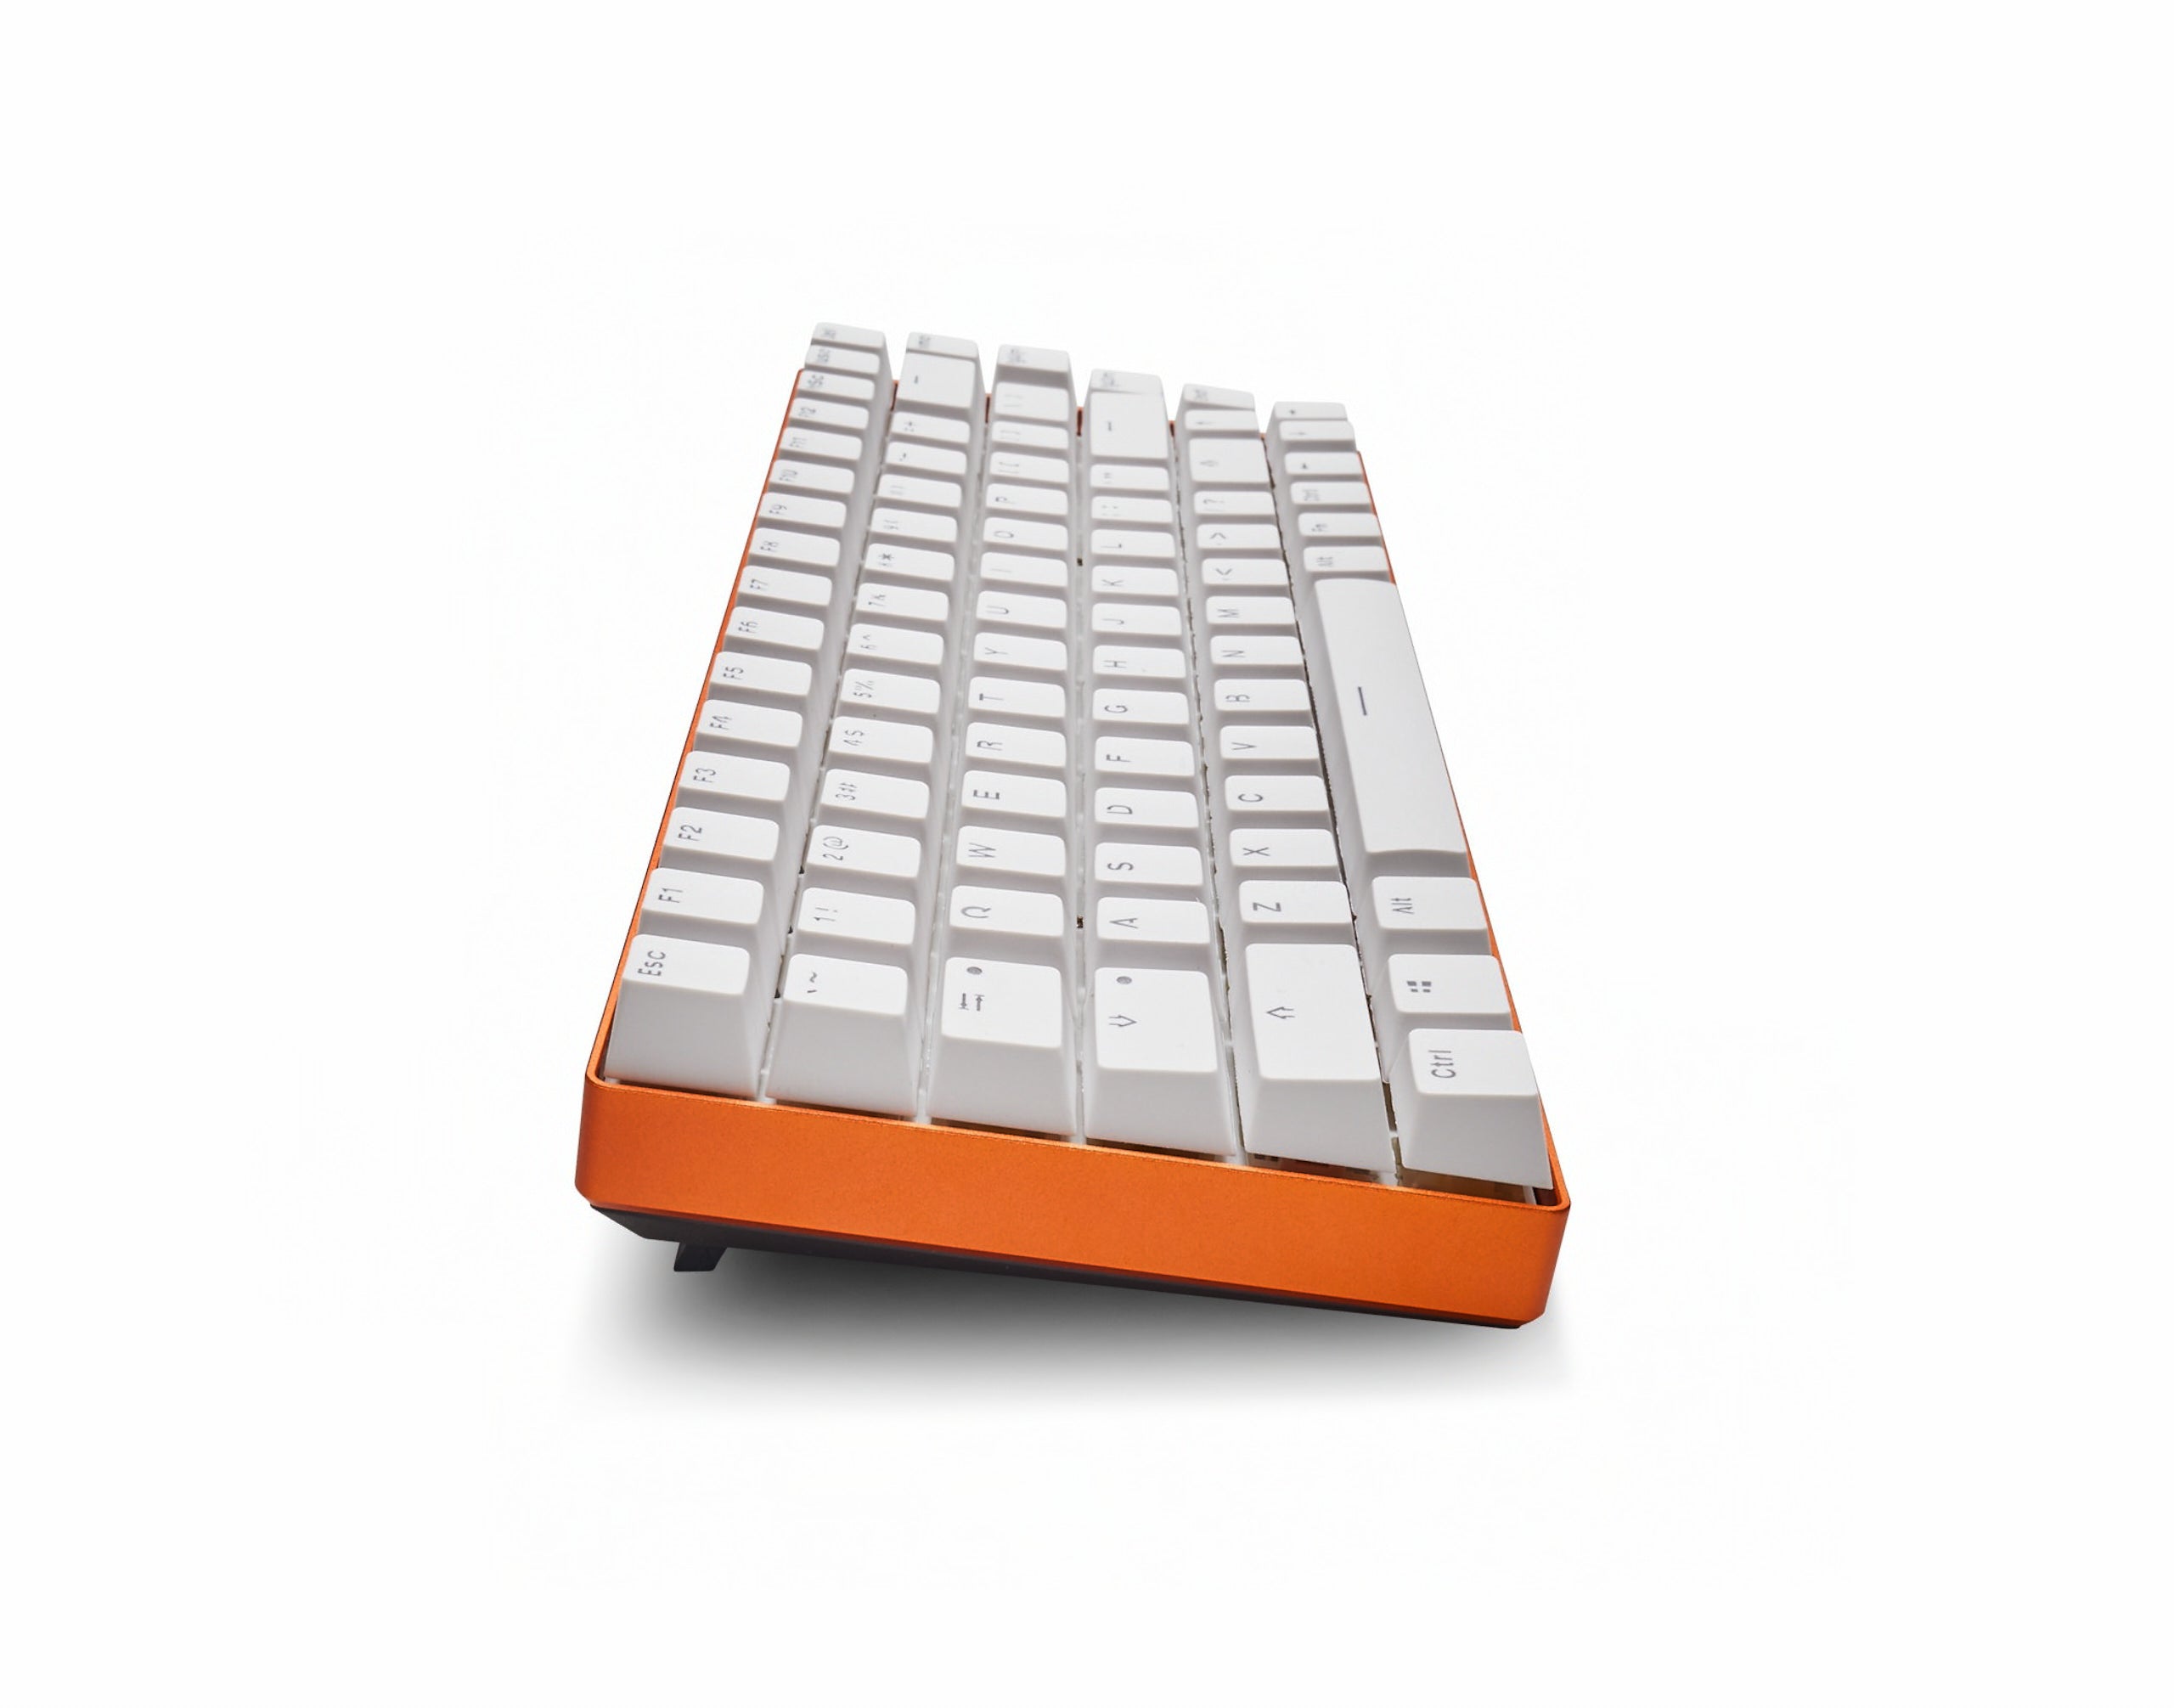 Glacier Minimalist Wired Mechanical Keyboard-